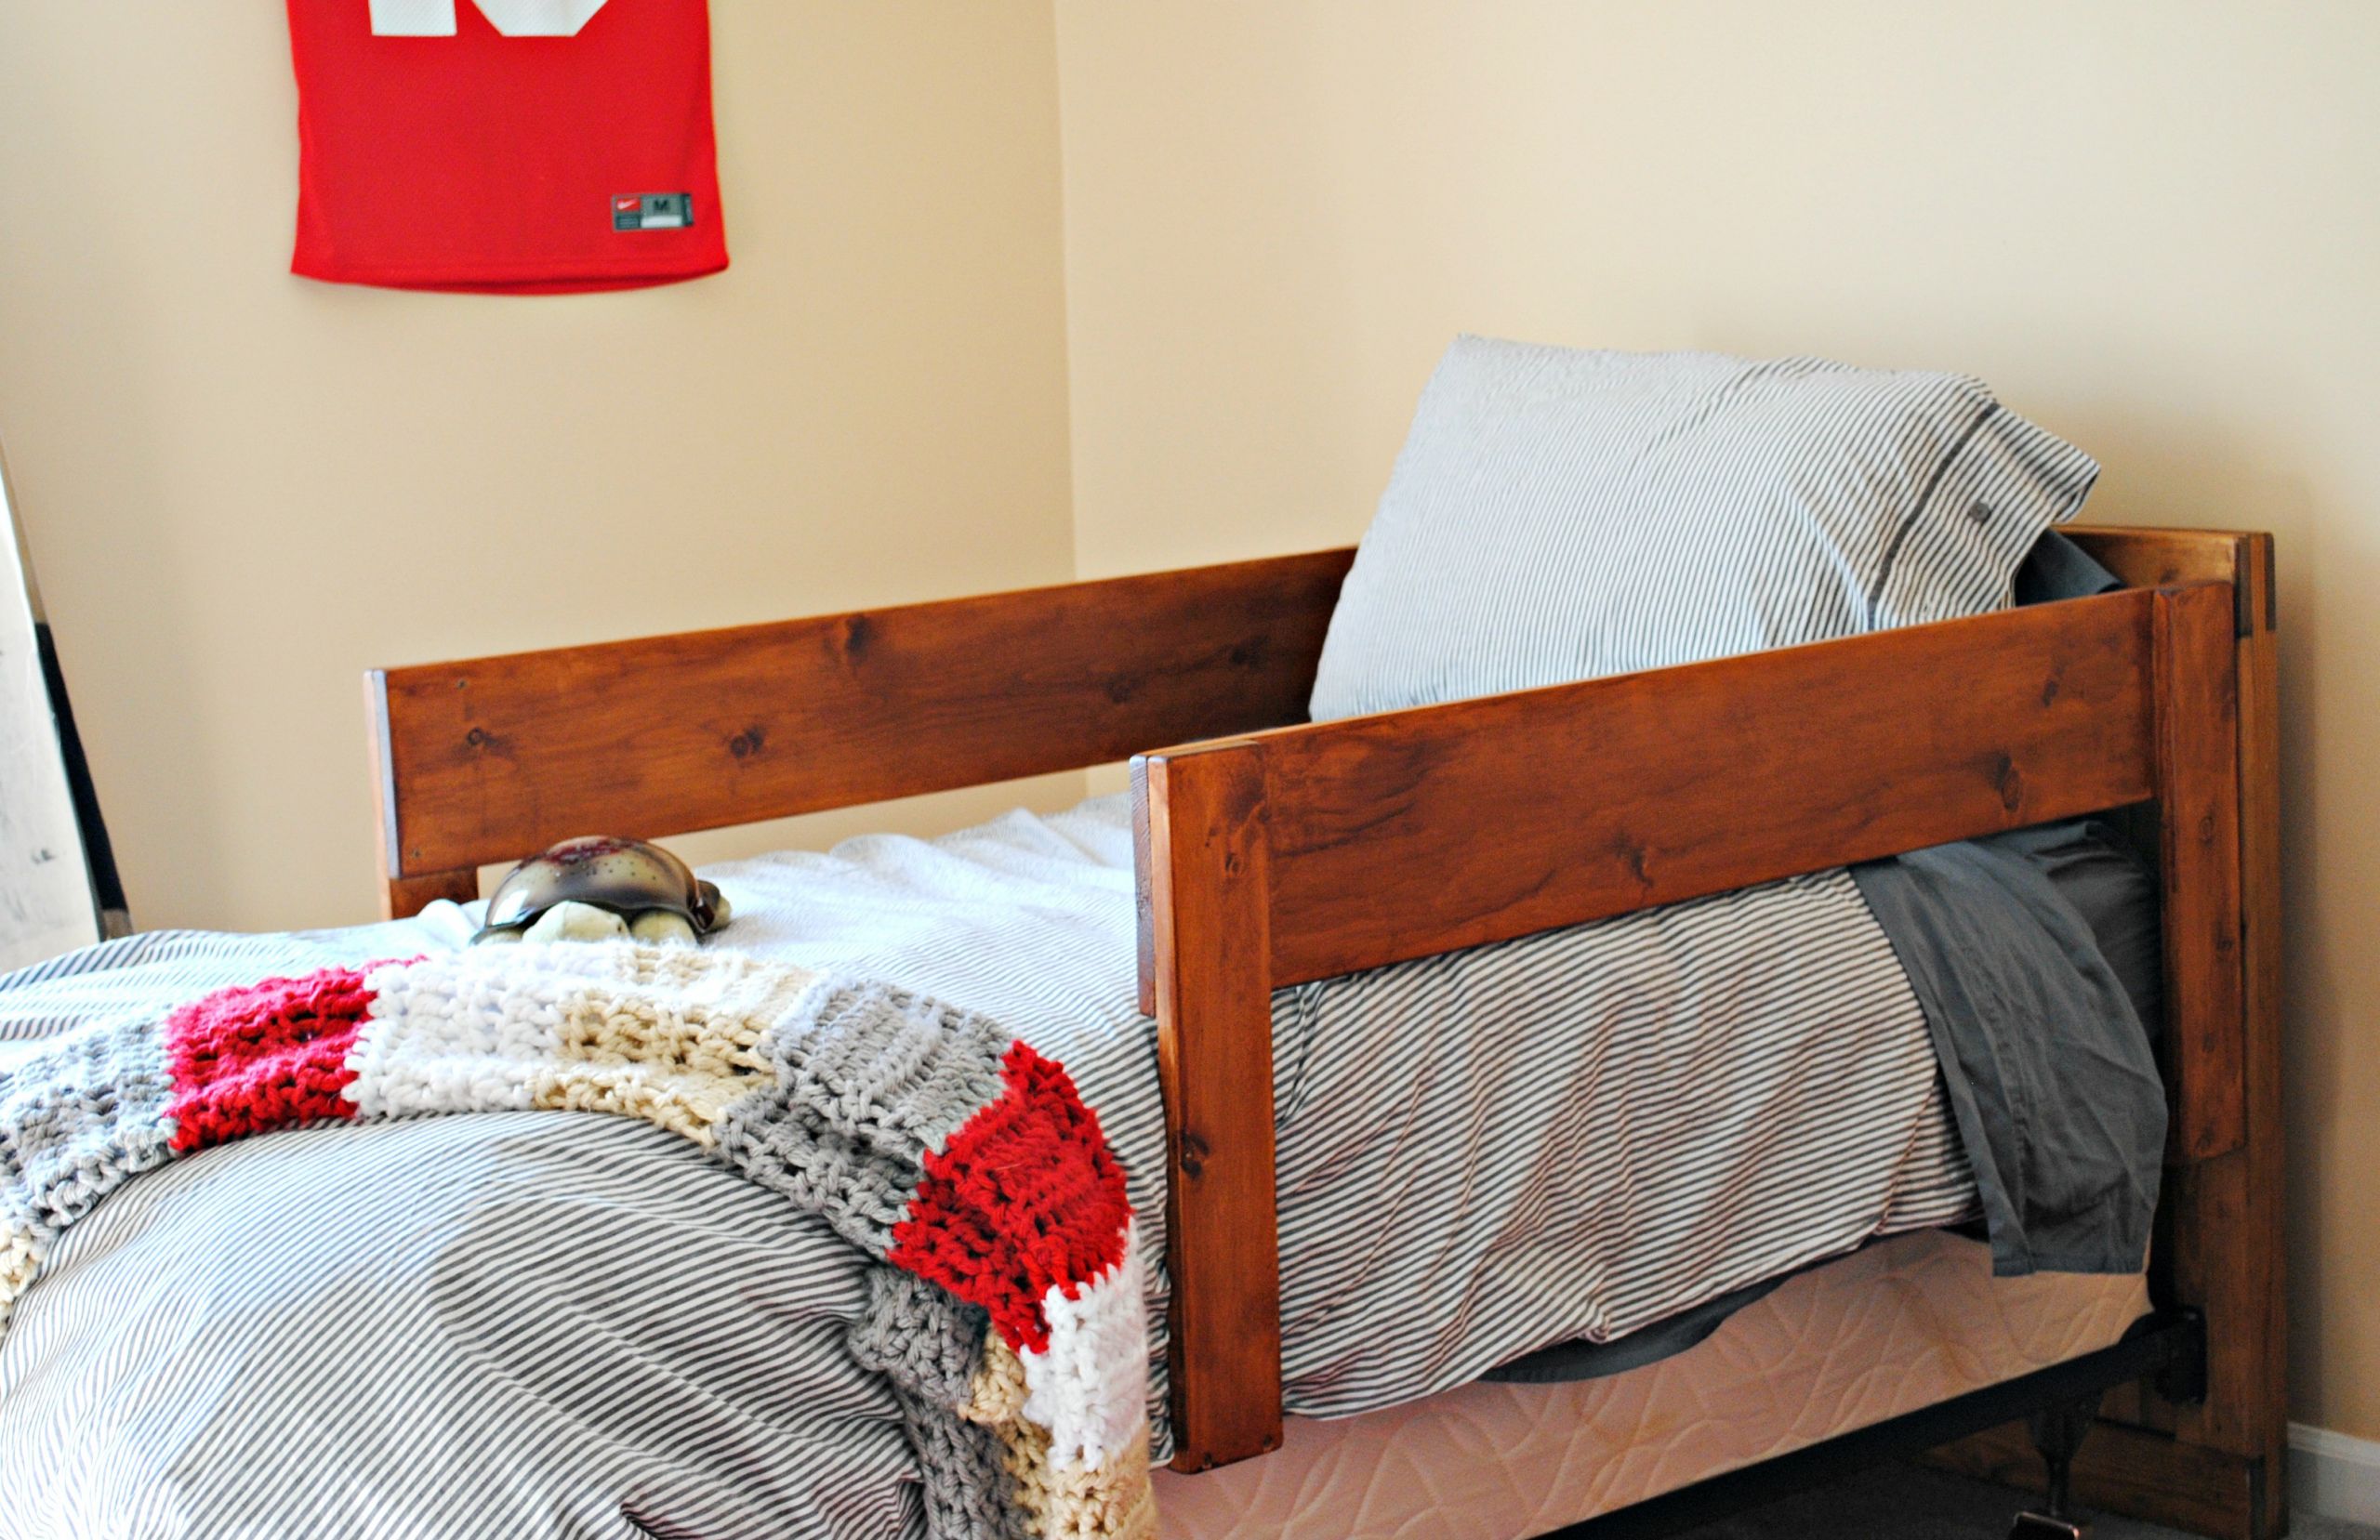 DIY Bed Rail For Toddler
 DIY Toddler Bed Rails Place in Progress